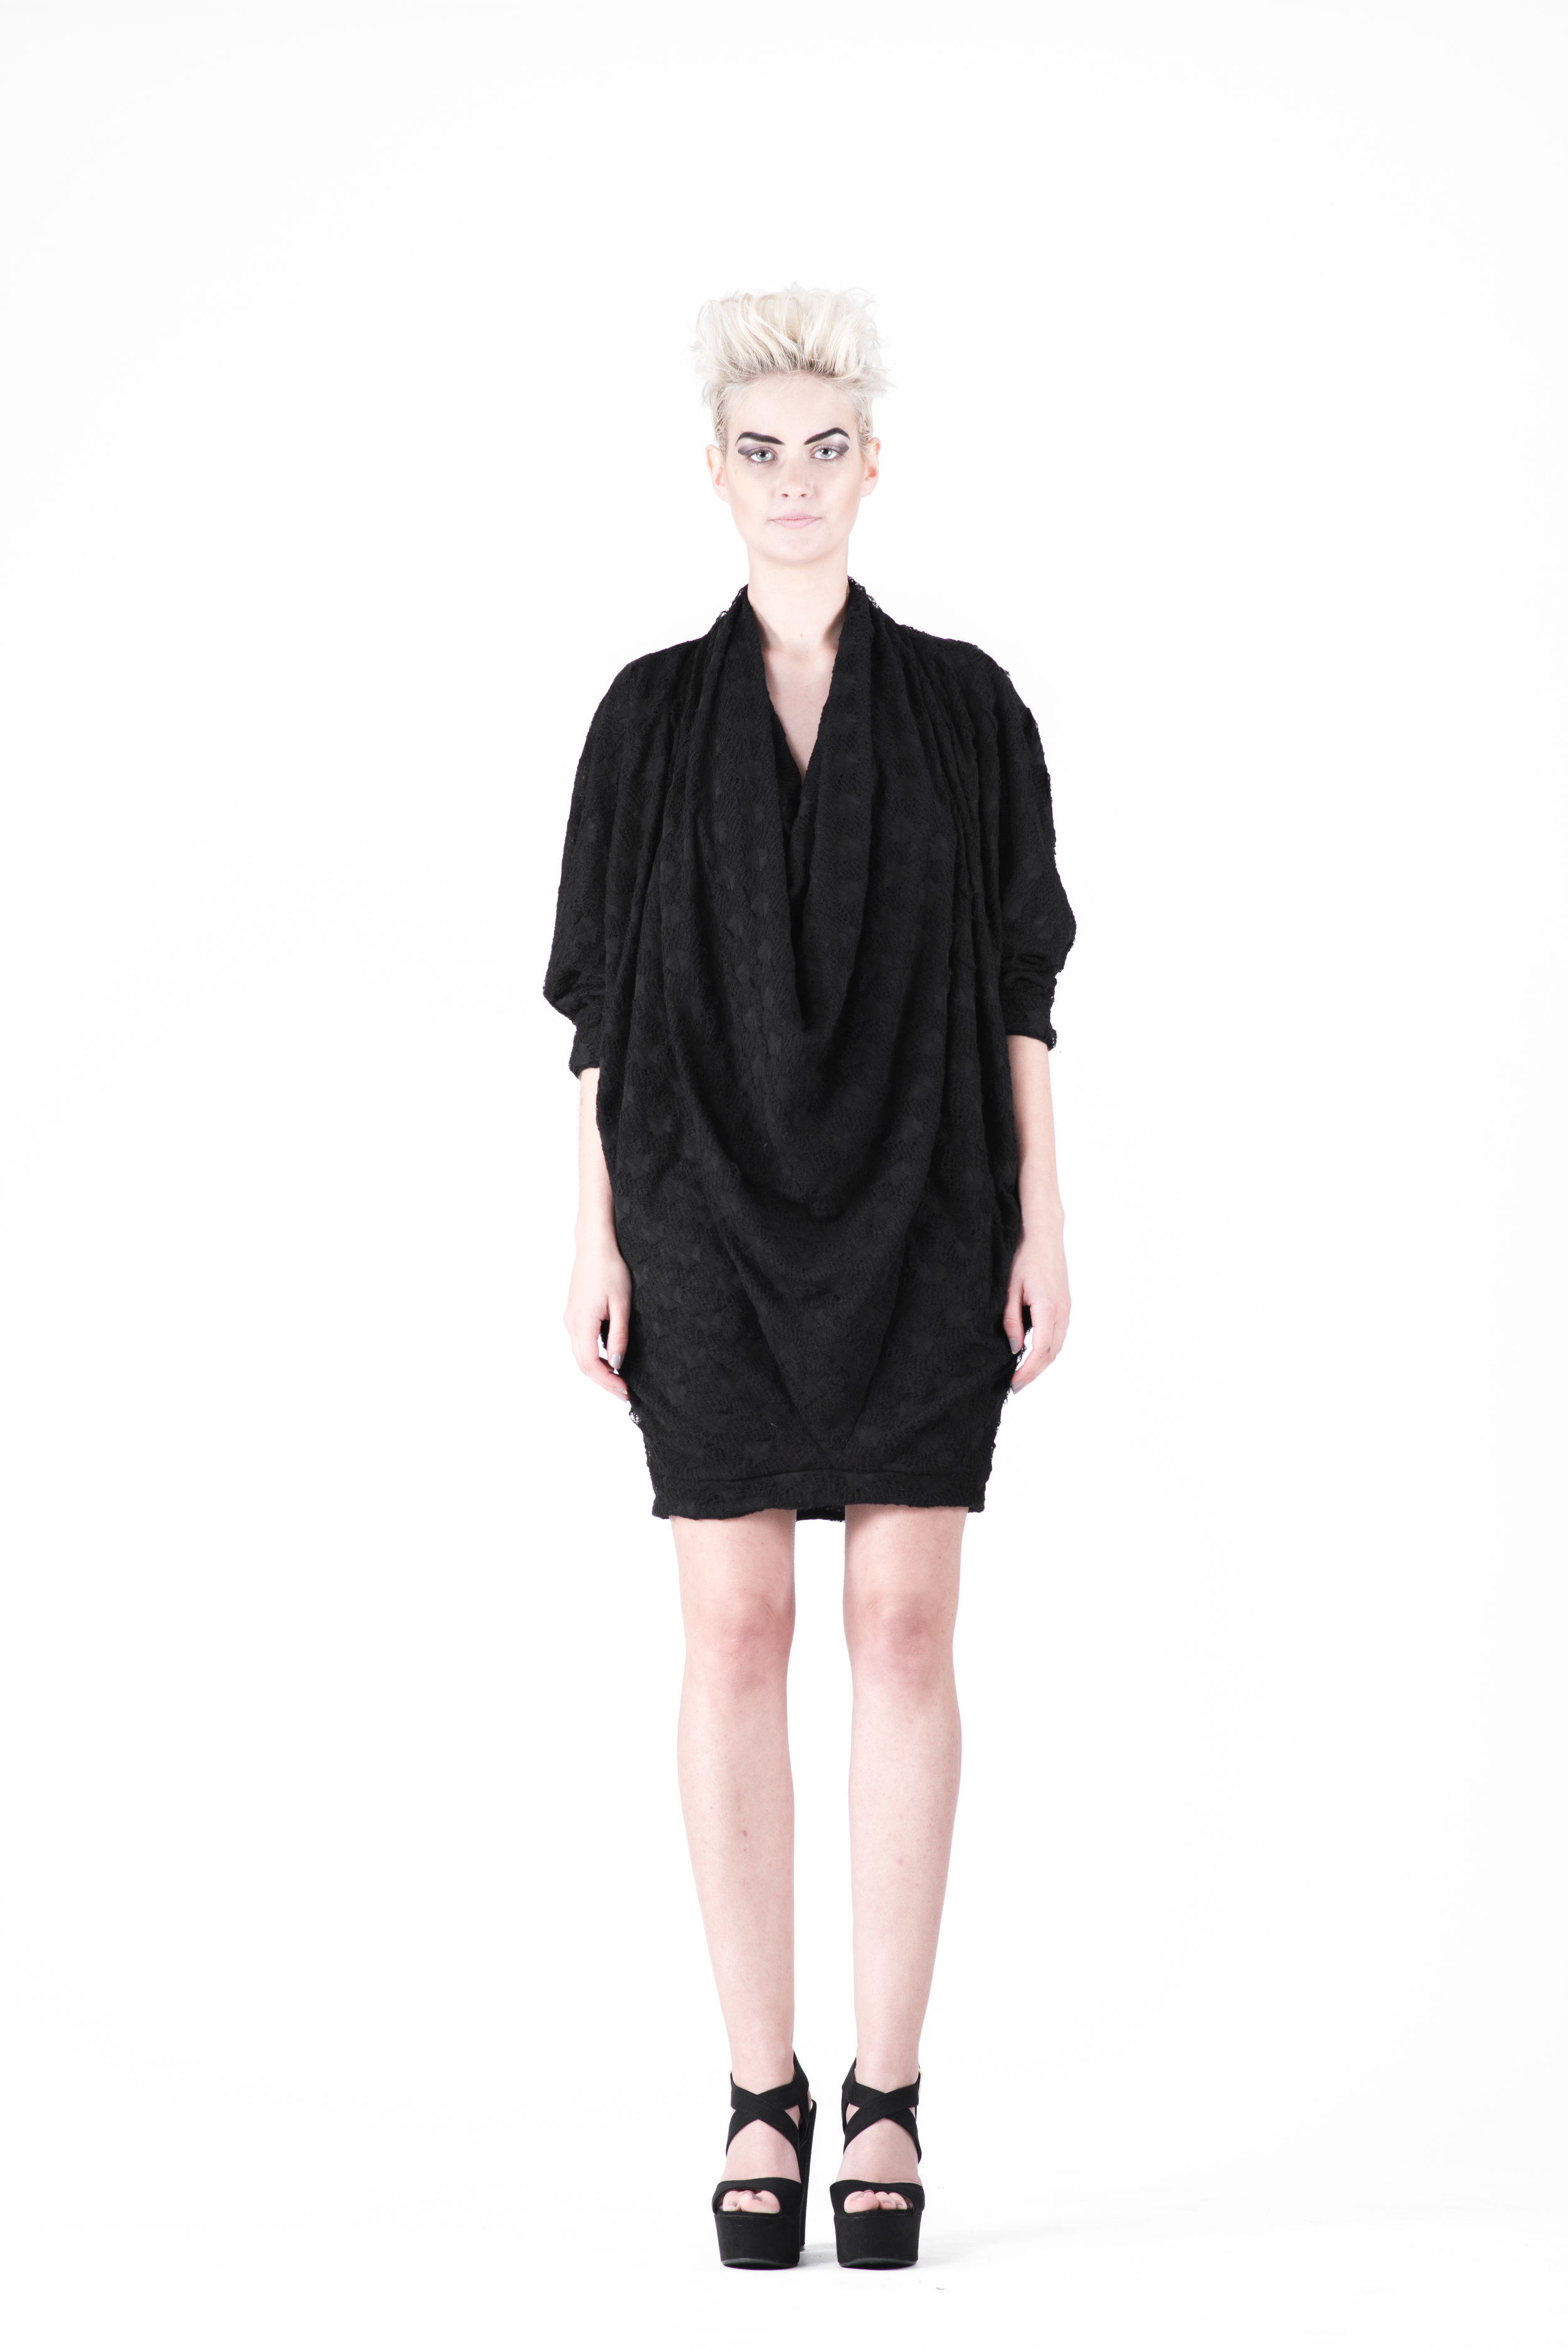 zaramia-ava-zaramiaava-leeds-fashion-designer-ethical-sustainable-tailored-minimalist-aya-aoi-black-dress-belt-dress-versatile-texture-obi-drape-cowl-styling-womenswear-models-photoshoot-73